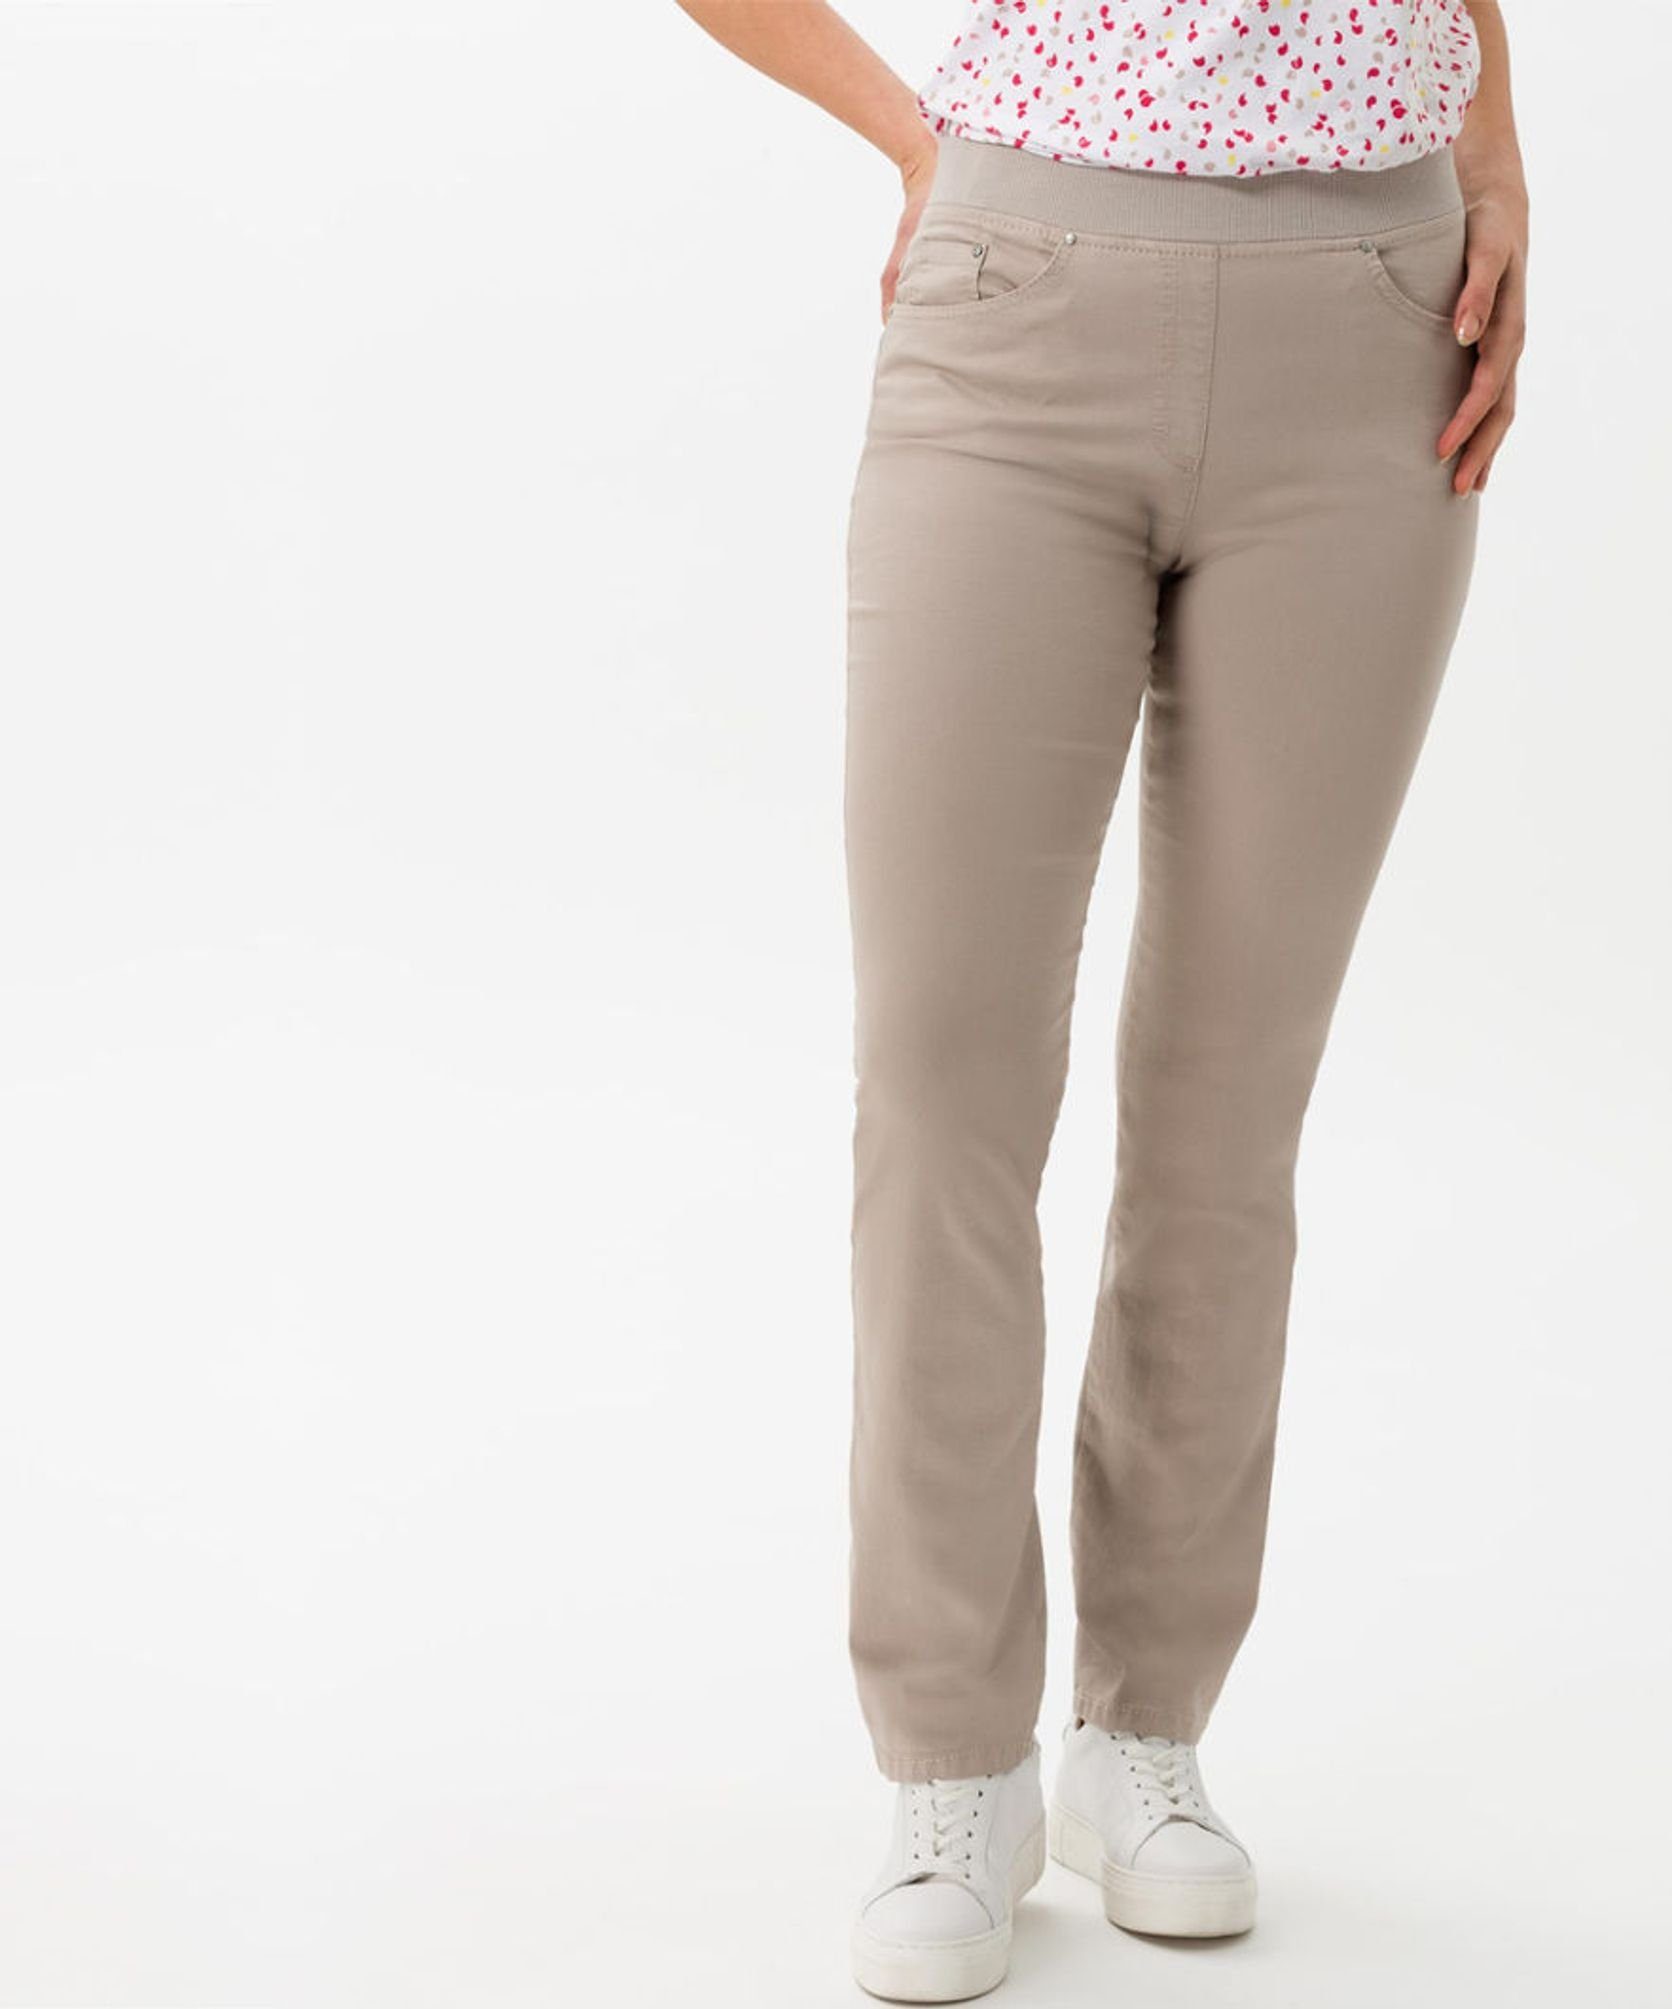 5-Pocket-Jeans 14-6227 BRAX RAPHAELA light by taupe (55)